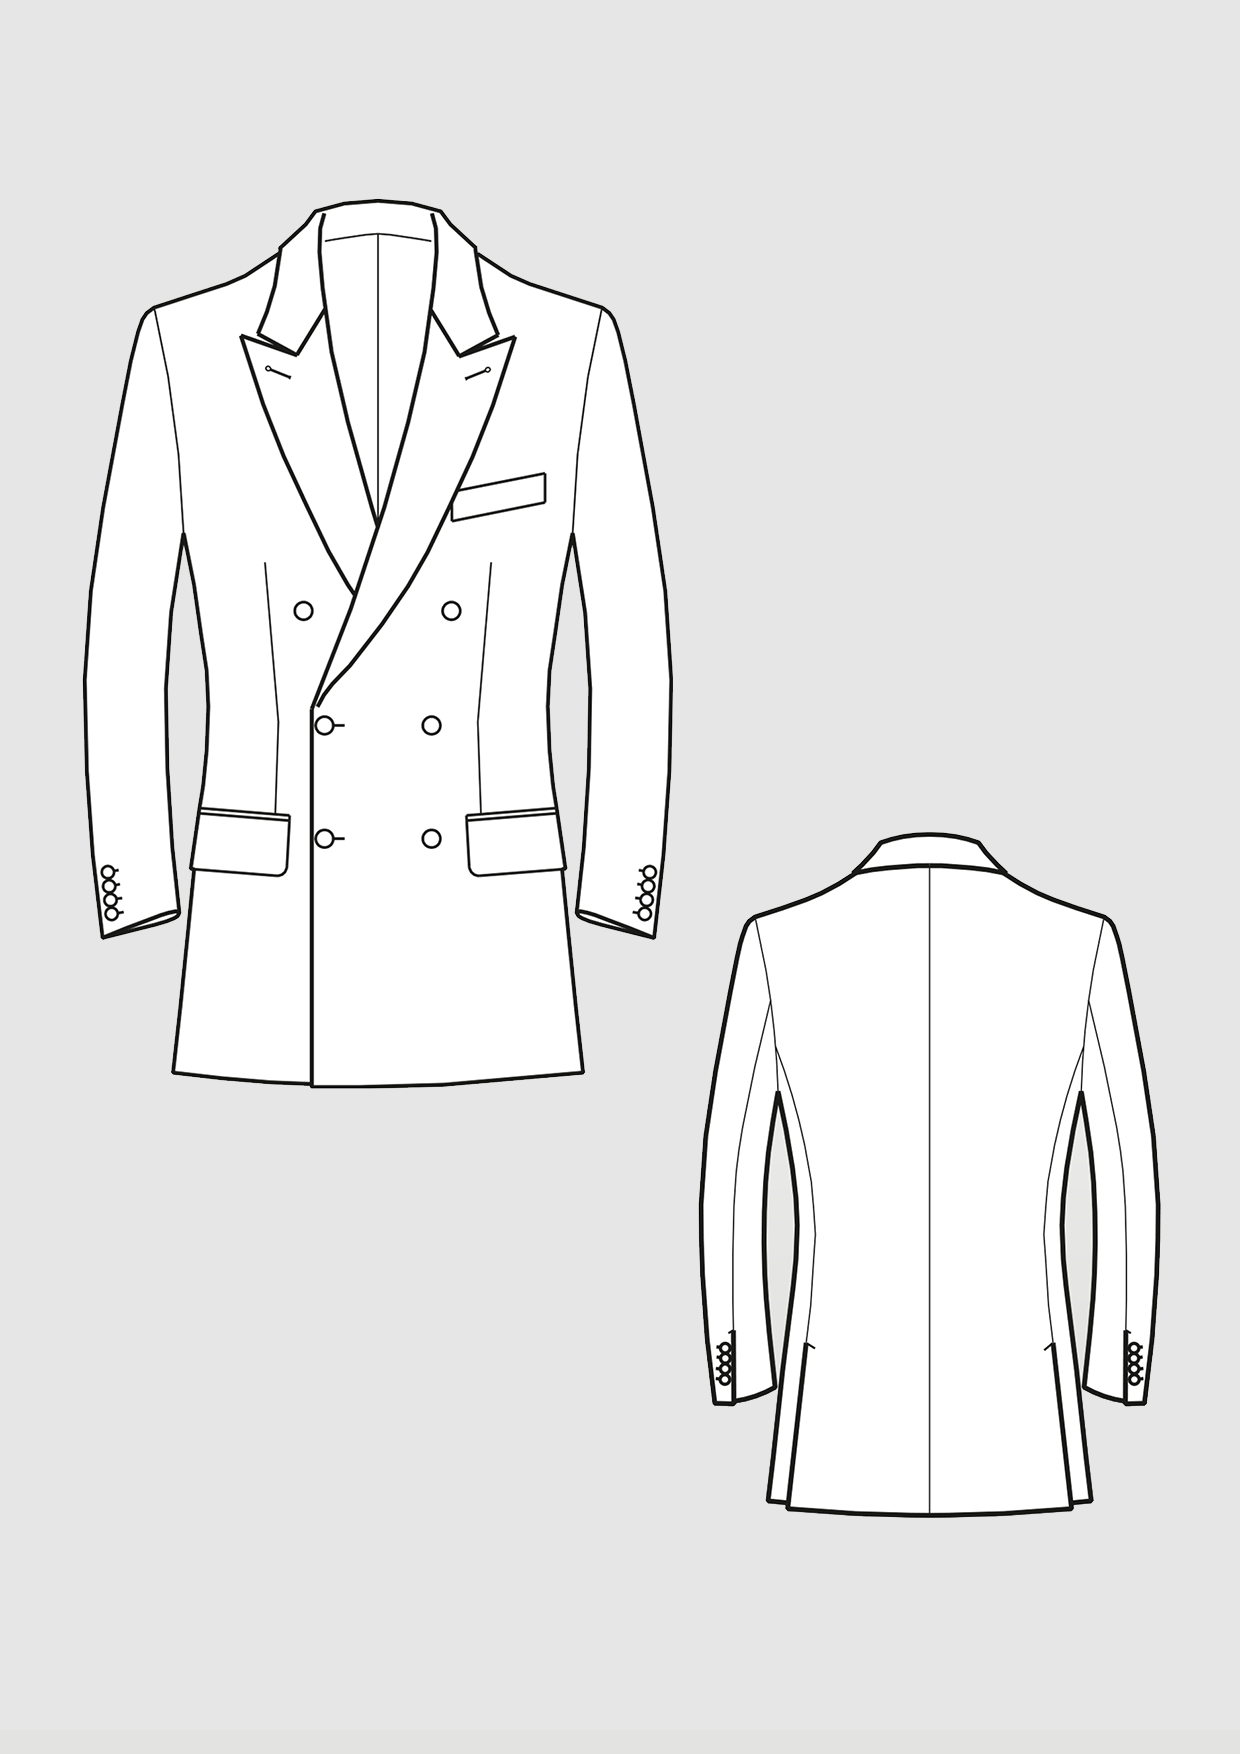 pattern double-breasted jacket basic block